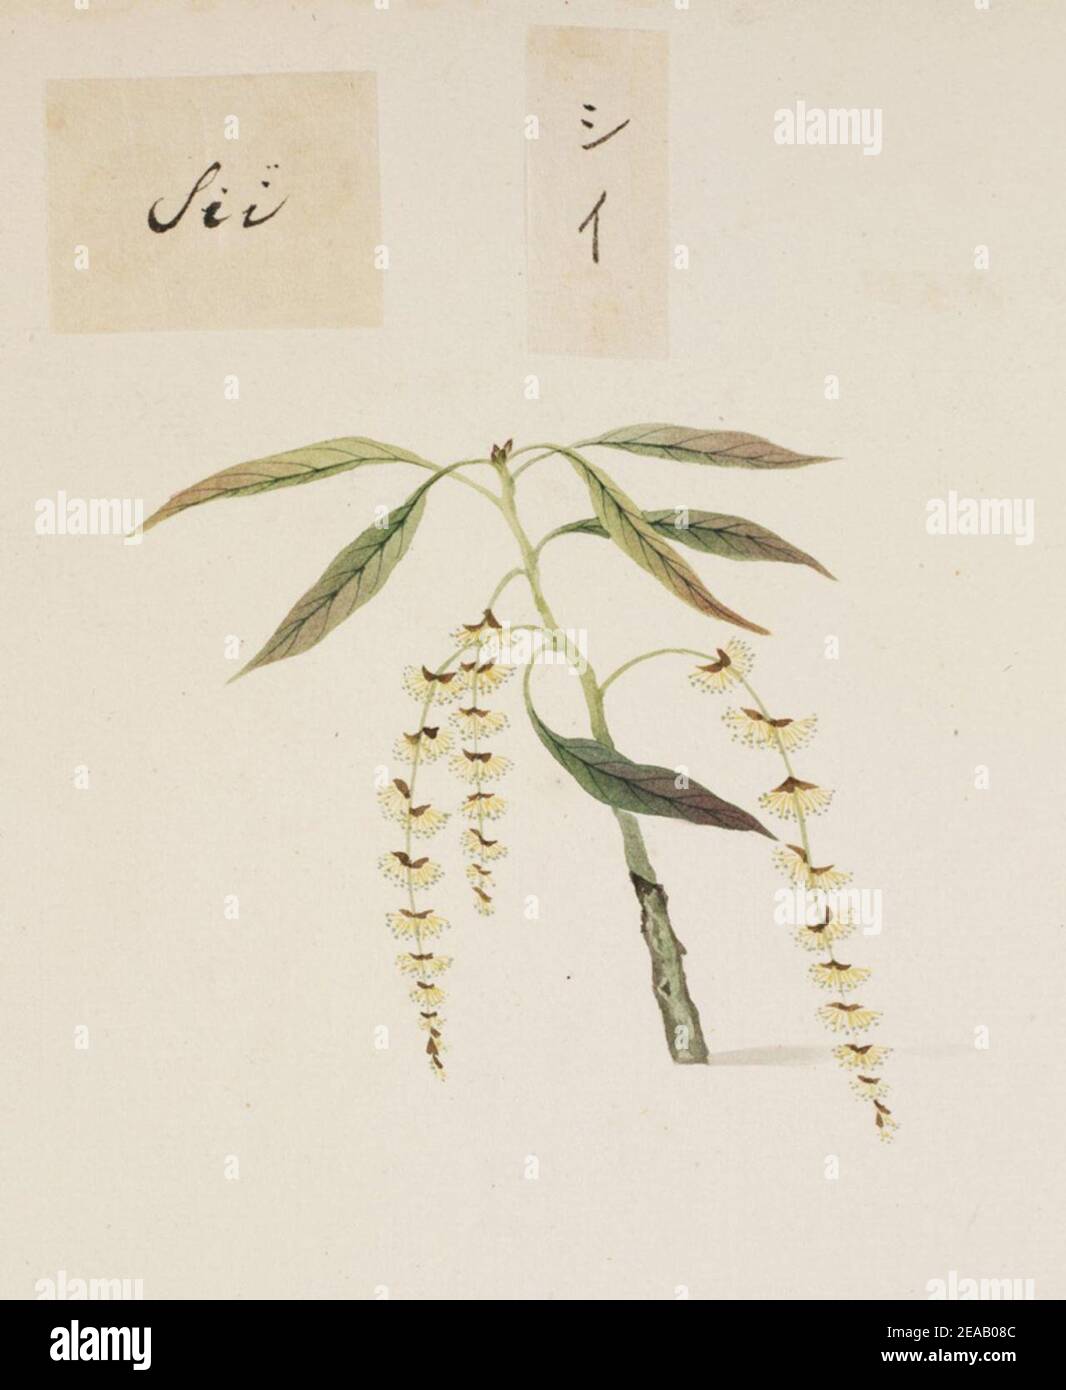 .801 - Castanopsis sieboldii - Kawahara Keiga - 1823 - 1829 - pencil drawing - water colour. Stock Photo